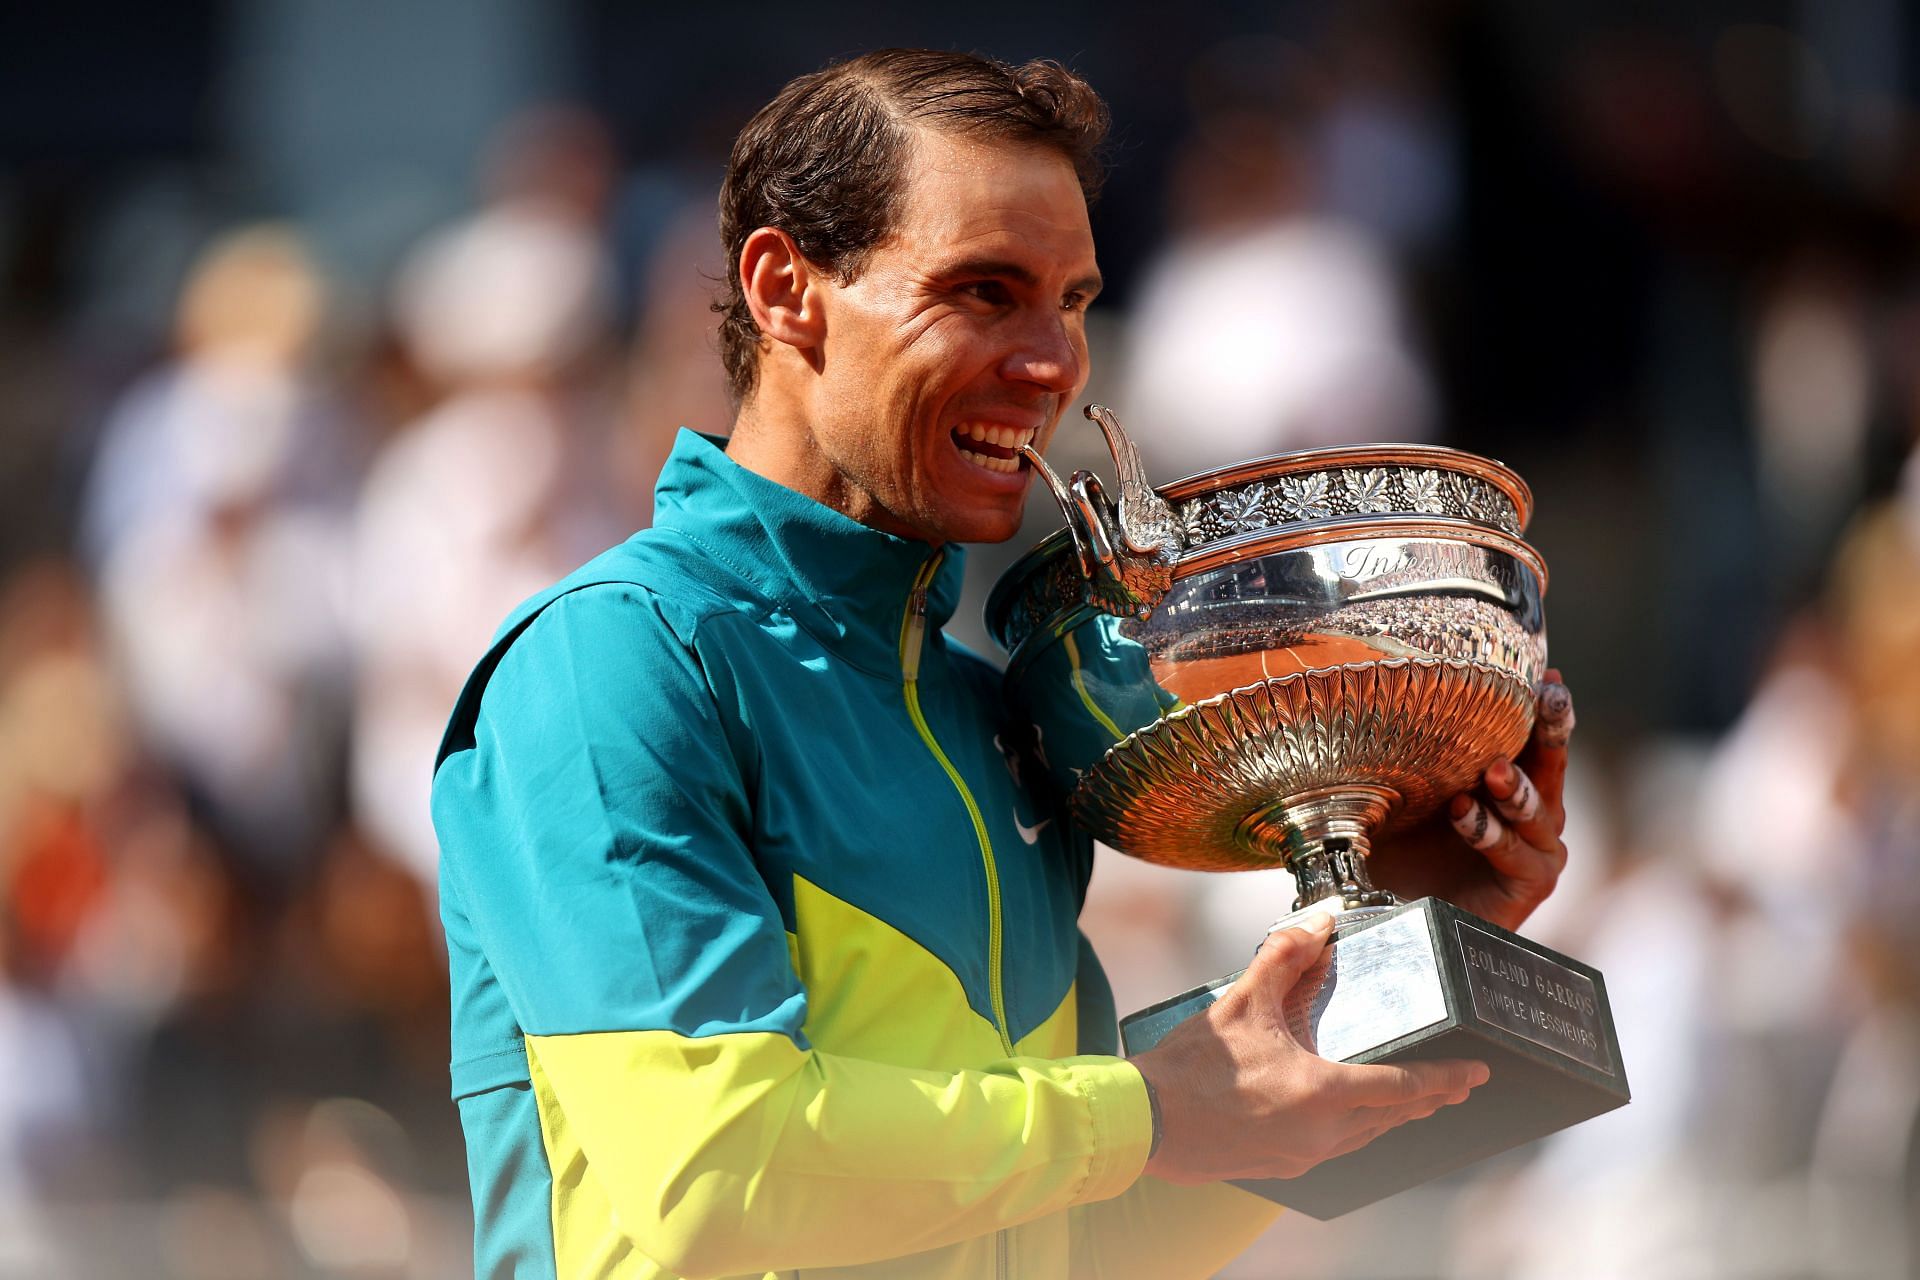 Rafael Nadal is a 22-time Grand Slam champion.